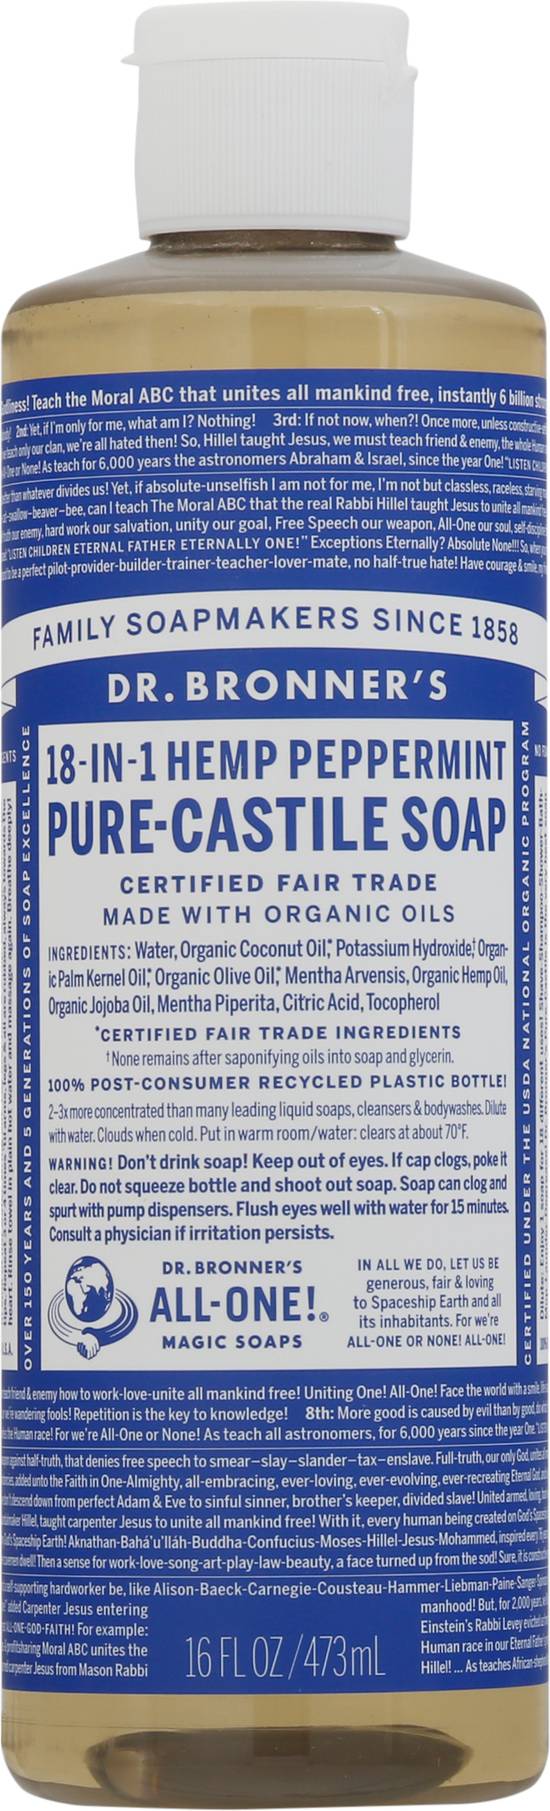 Dr. Bronner's 18-in-1 Hemp Peppermint Pure-Castile Soap (16 fl oz)